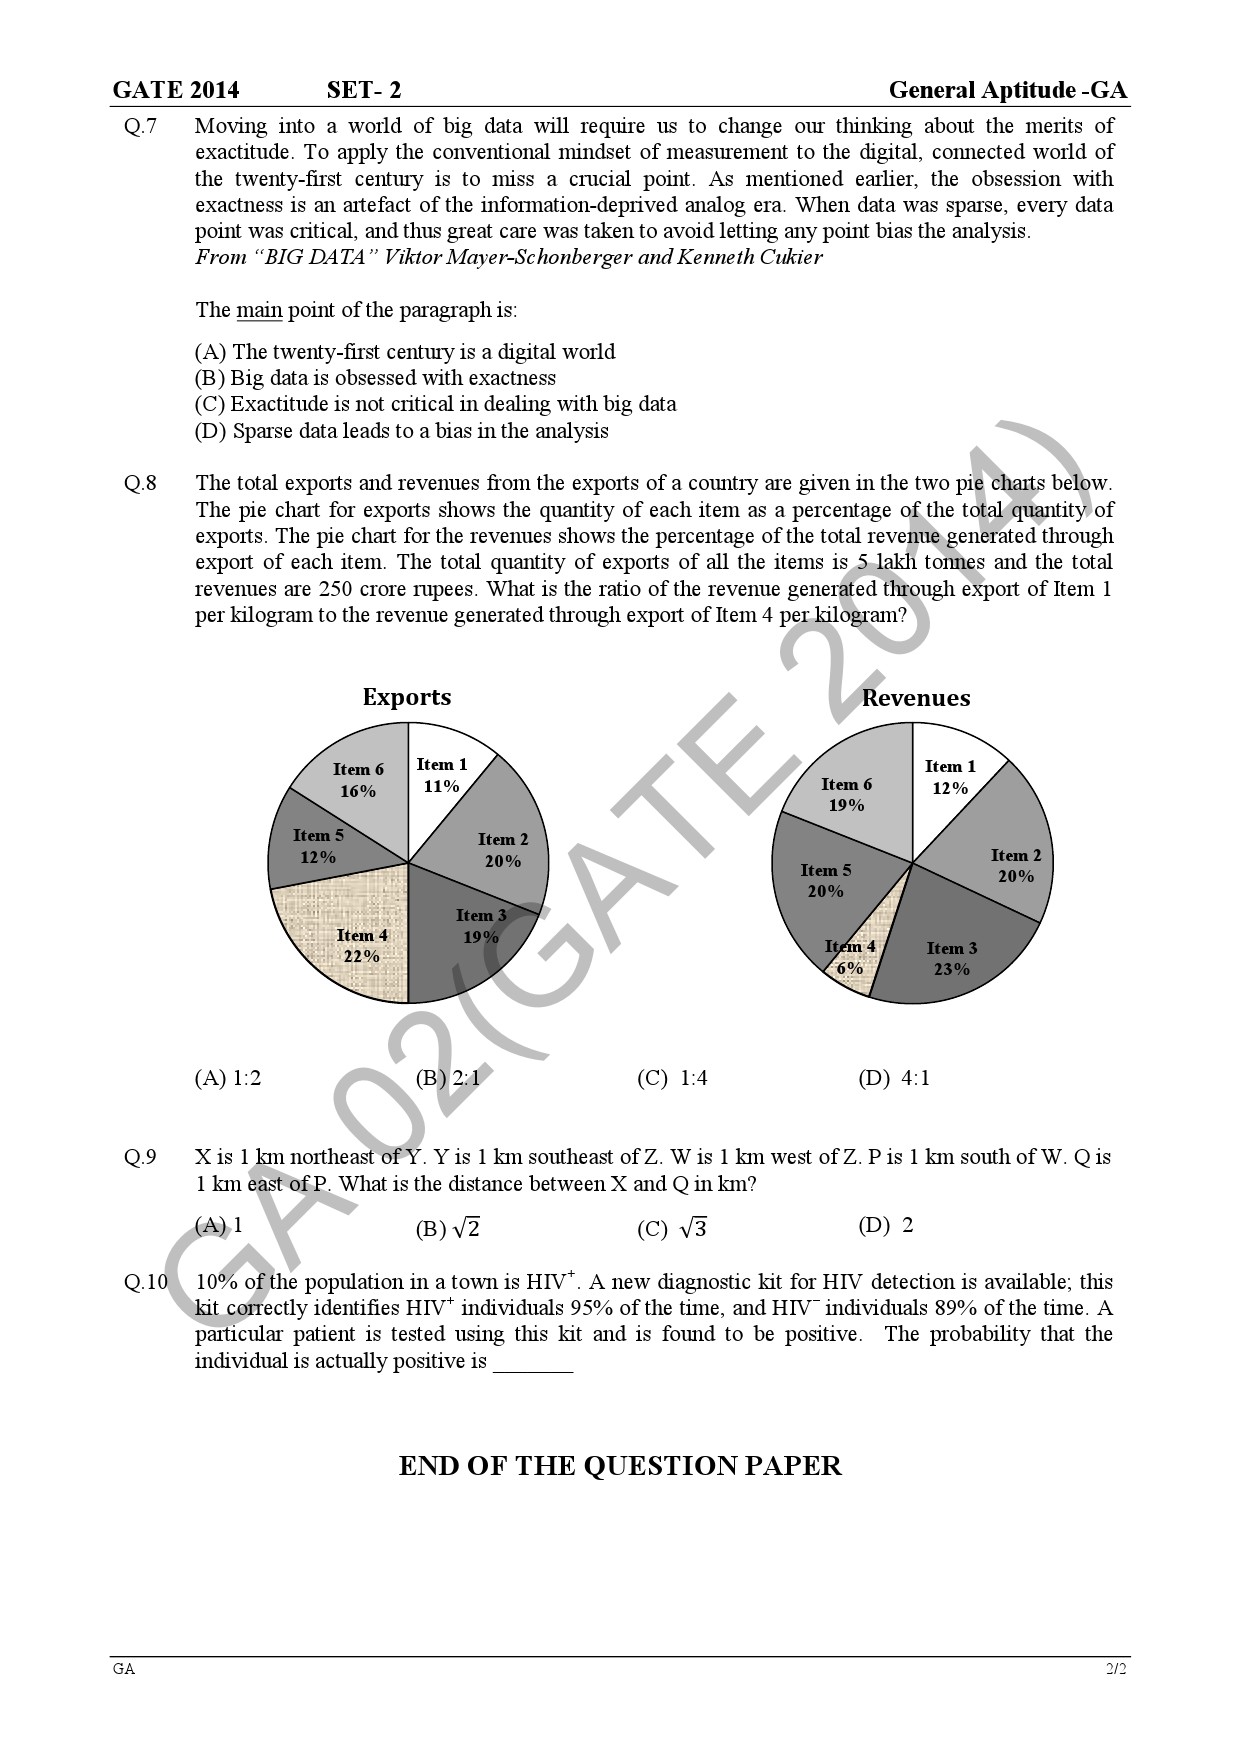 GATE Exam Question Paper 2014 Civil Engineering Set 2 6